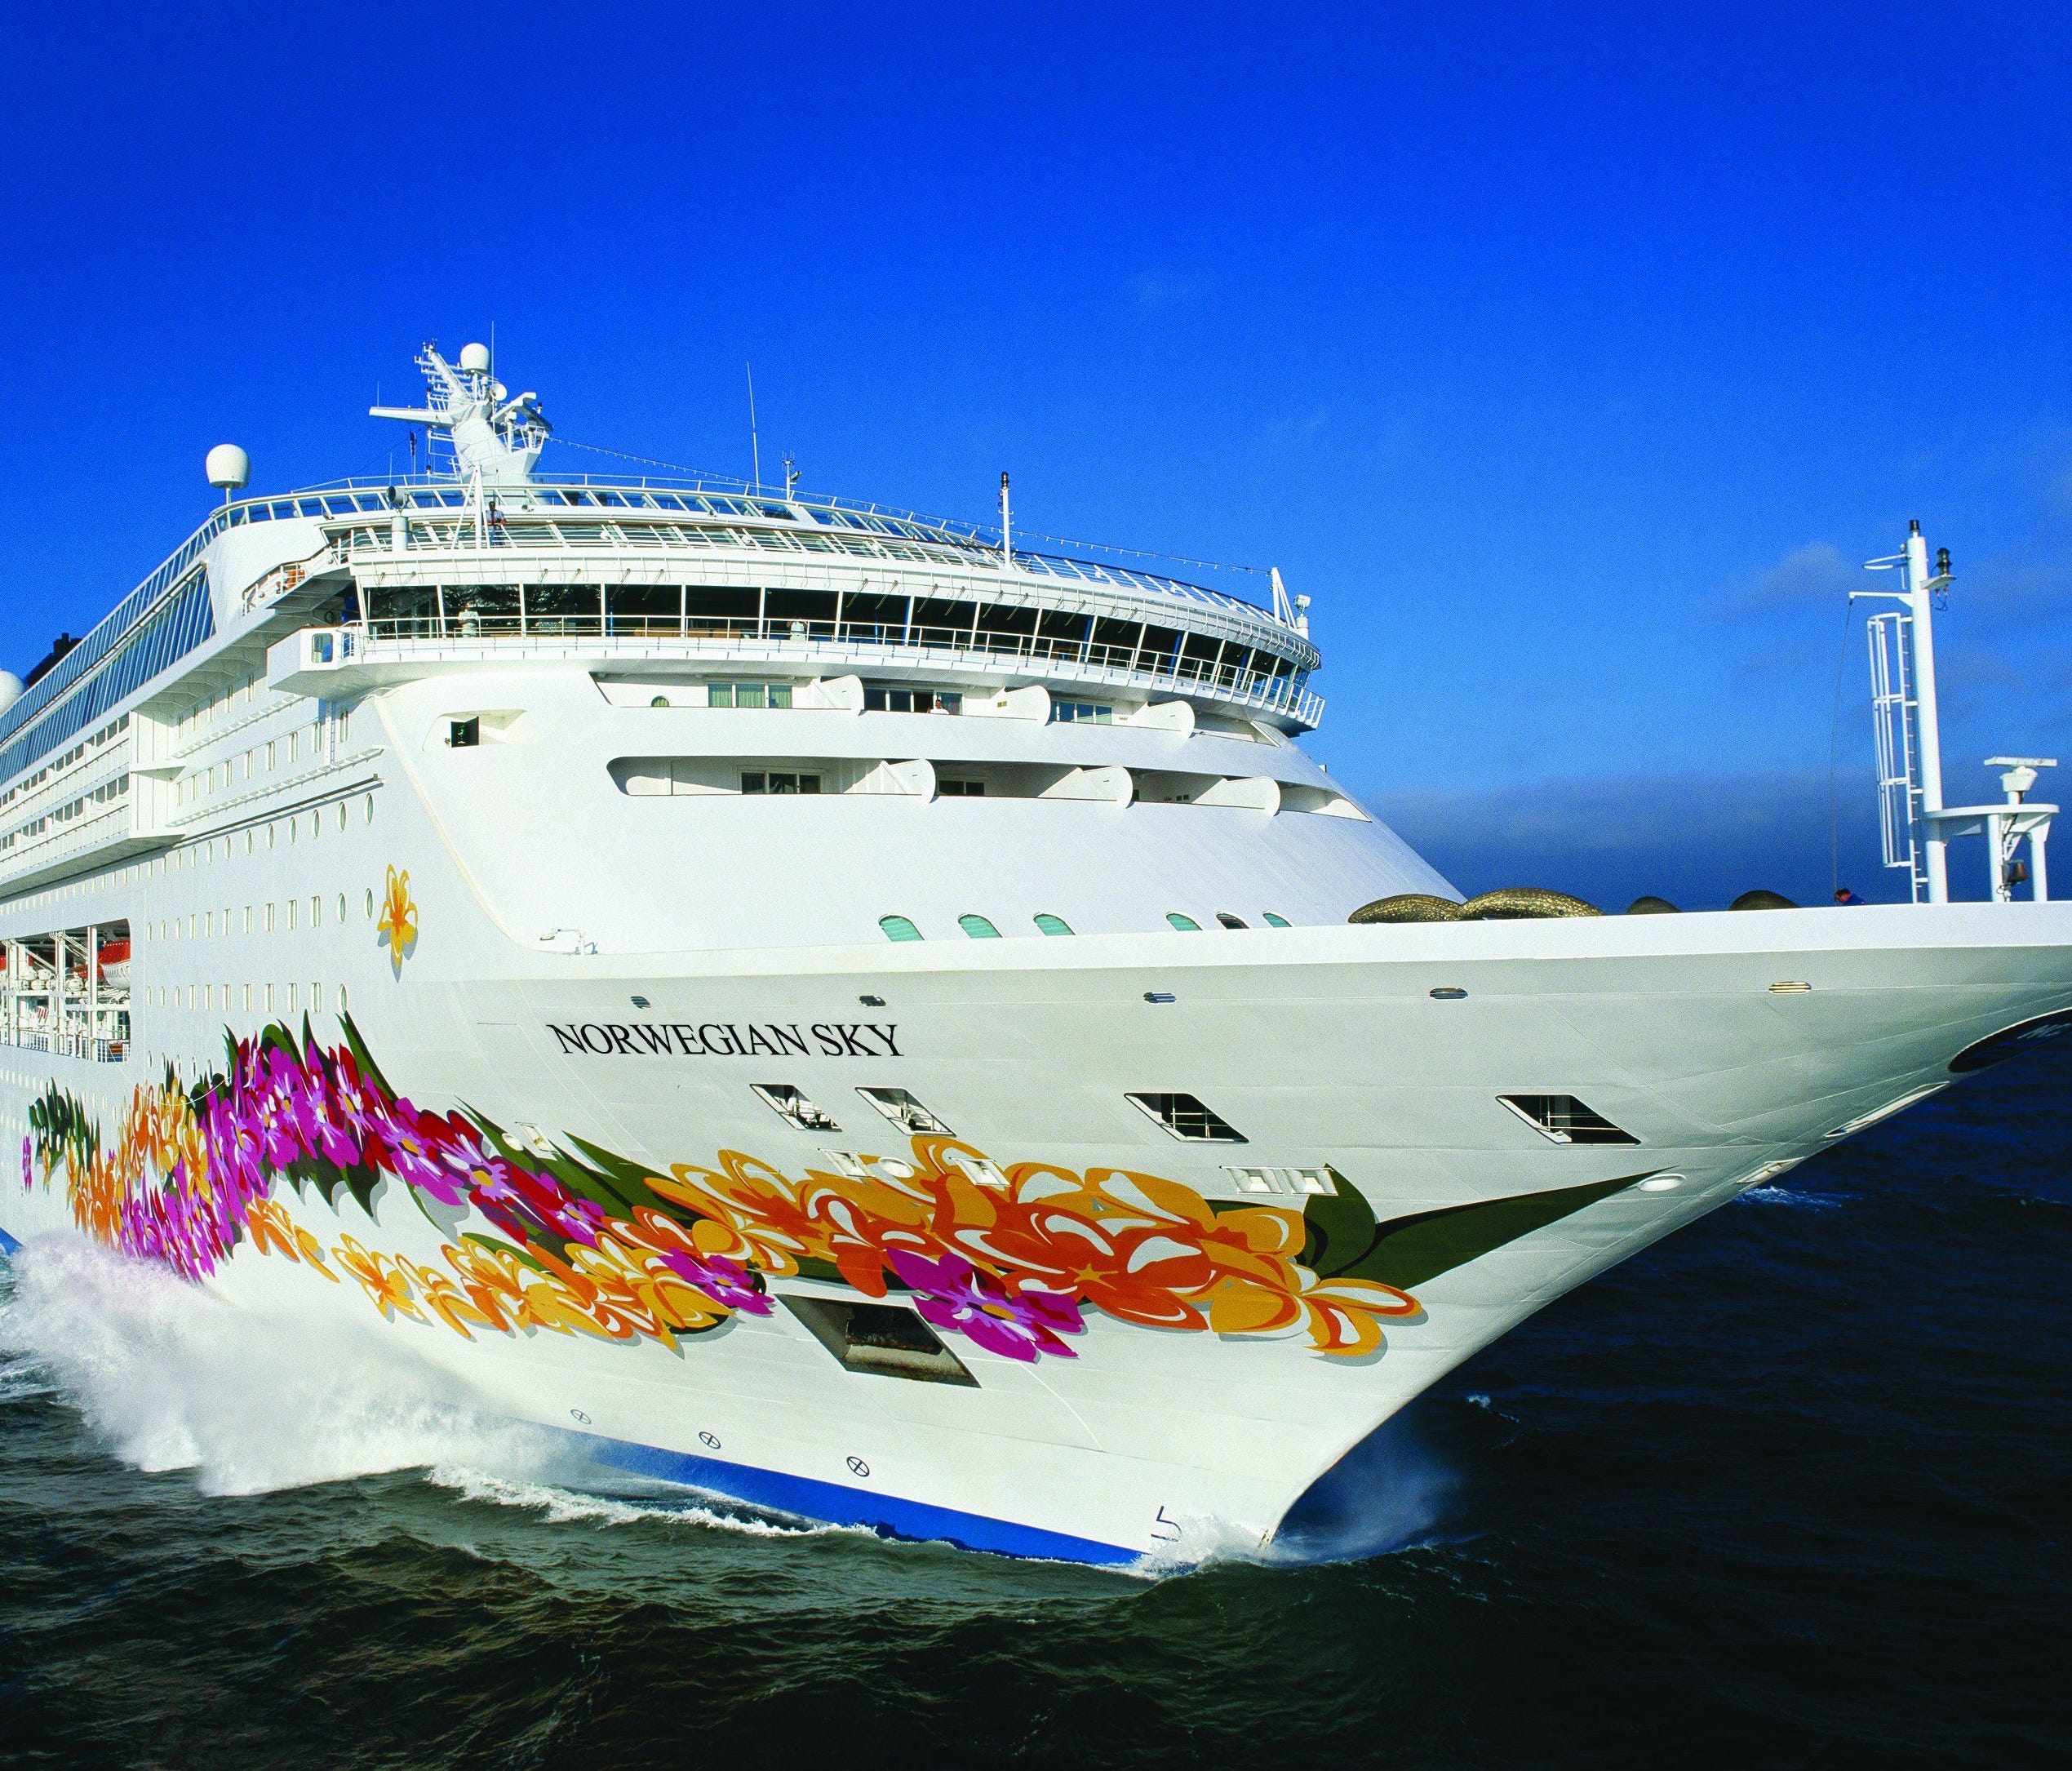 Norwegian Cruise Line's 2,004-passenger Norwegian Sky began sailing to Cuba out of Miami in May 2017.